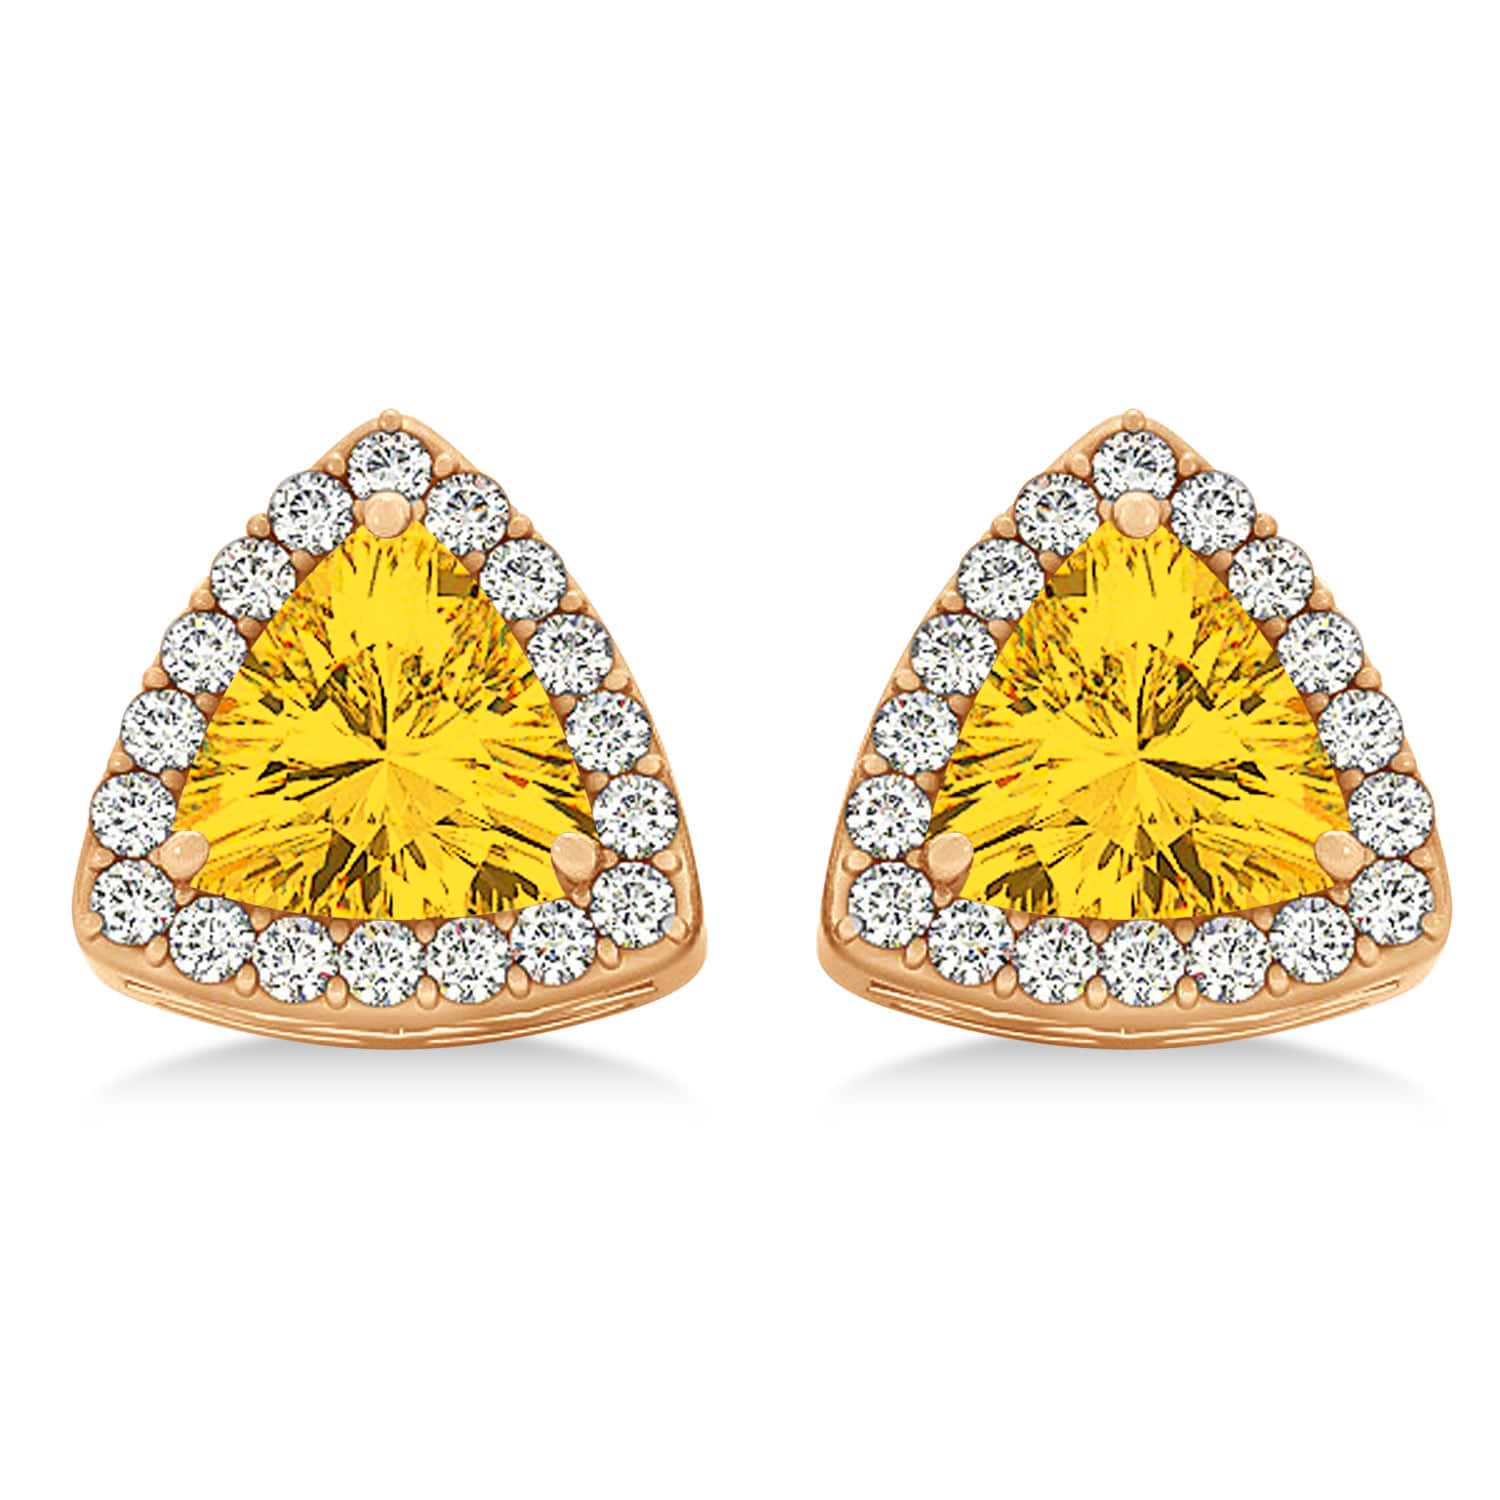 Trilliant Cut Yellow Sapphire & Diamond Halo Earrings 14k Rose Gold (0.93ct)